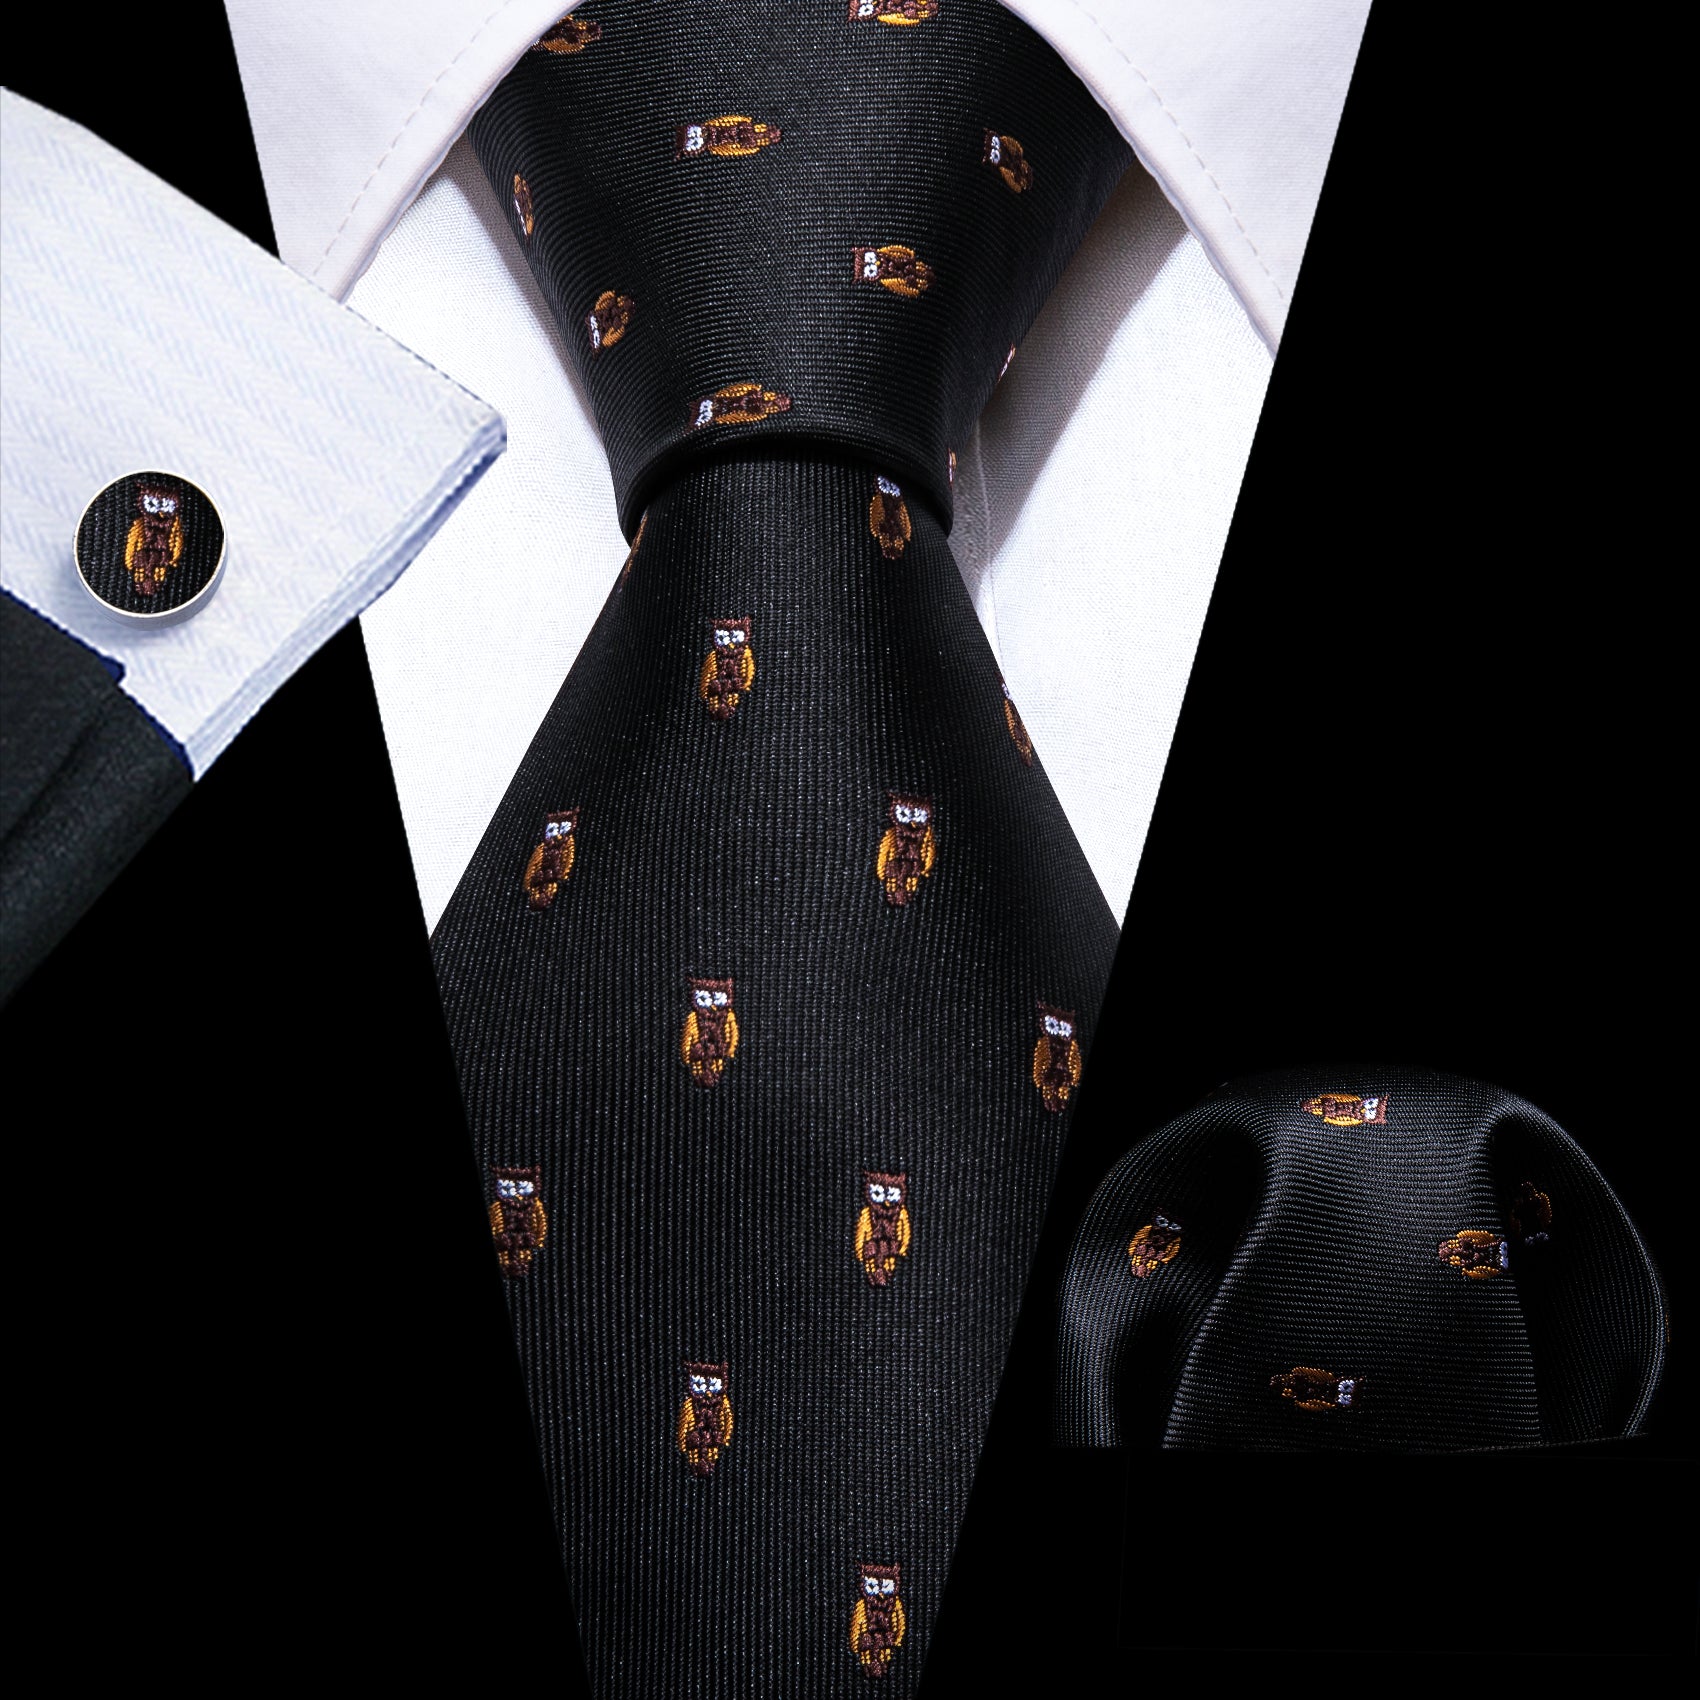 Barry.wang Black Tie Brown Owl Print Silk Tie Handkerchief Cufflinks Set